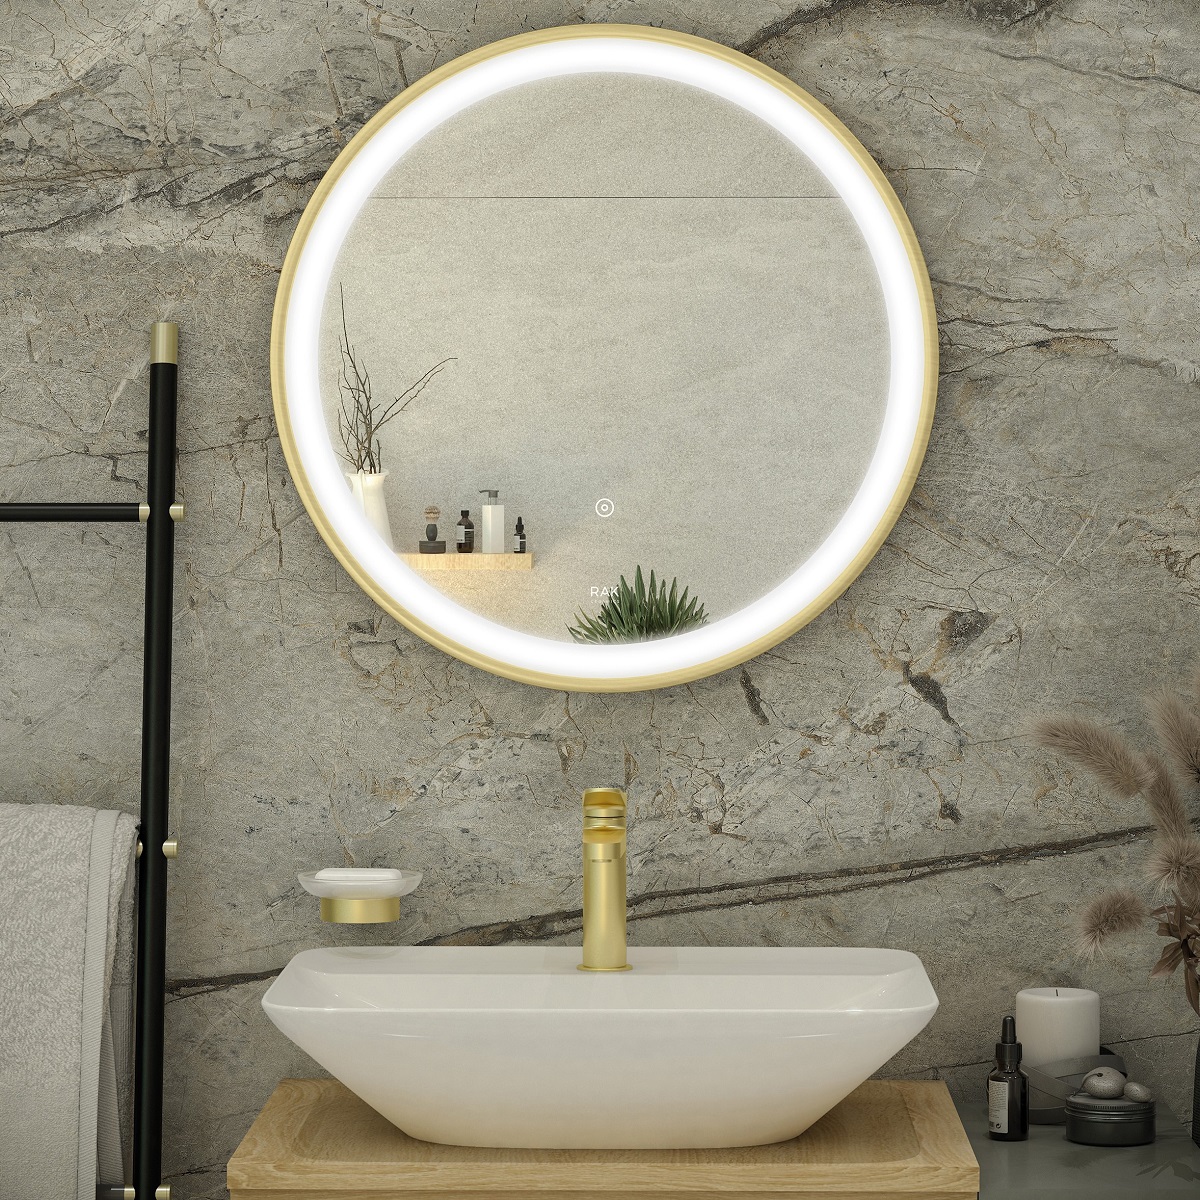 RAK round bathroom mirror on stone wall with a towel ladder